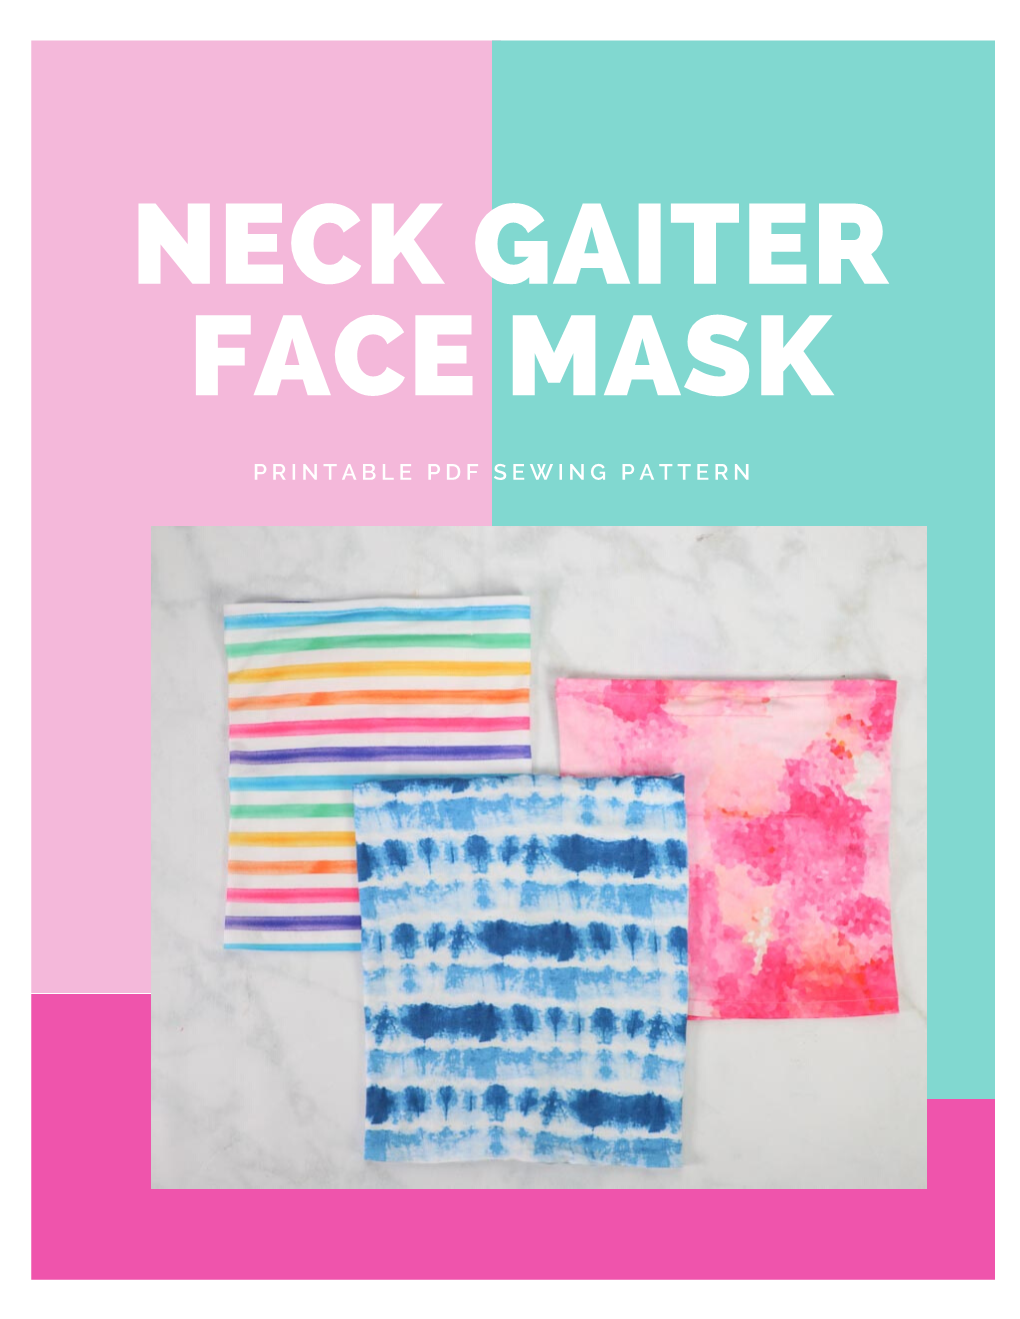 Neck Gaiter Face Mask